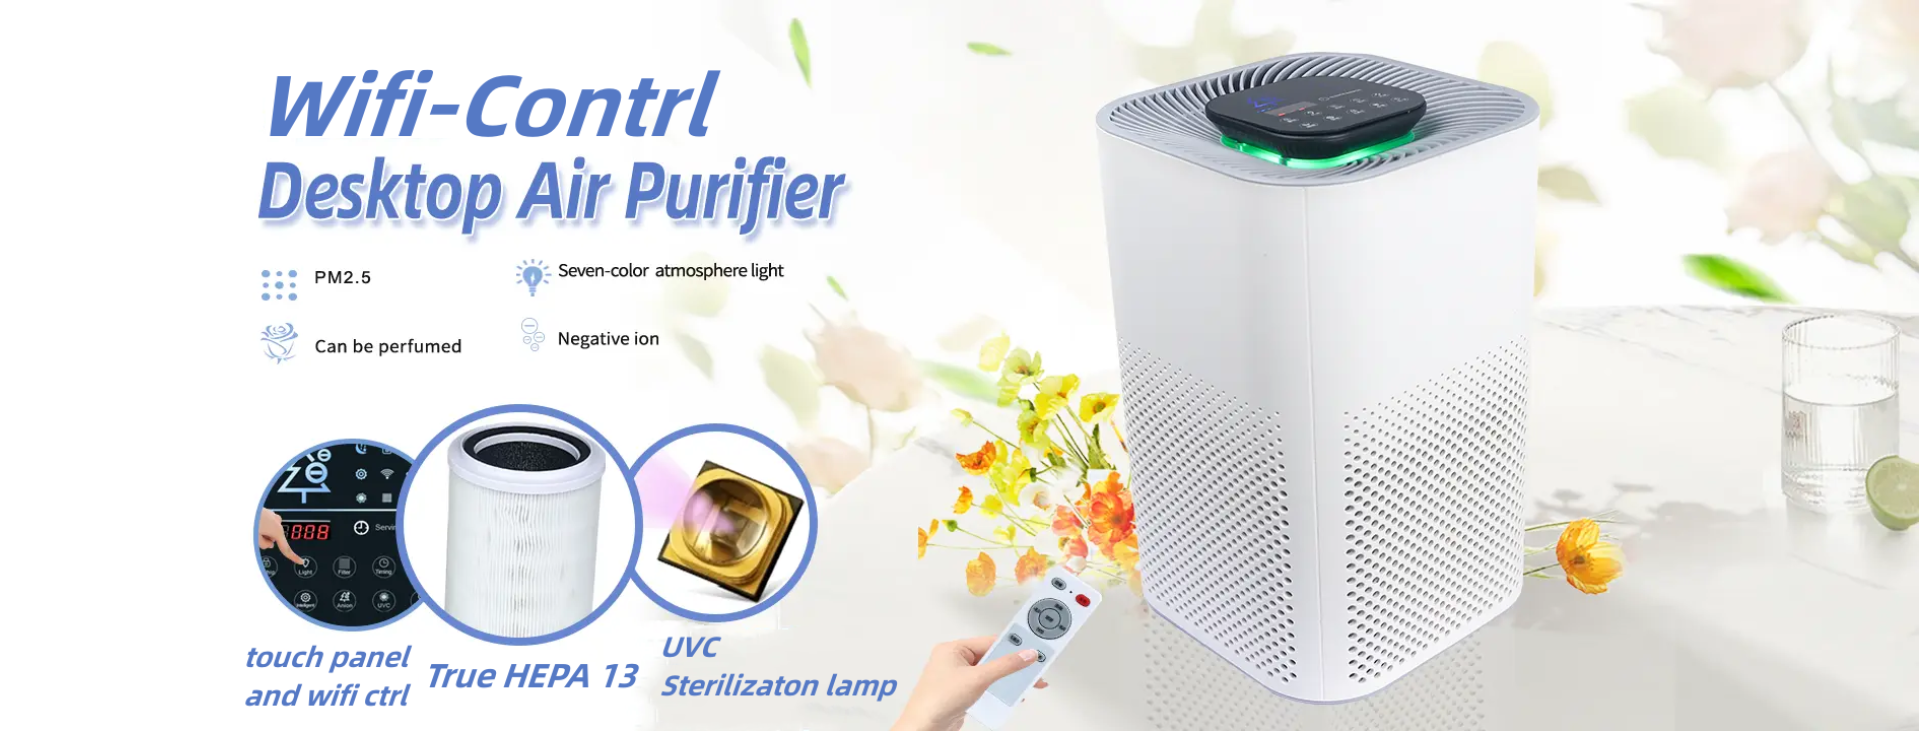 Air purifier poster1